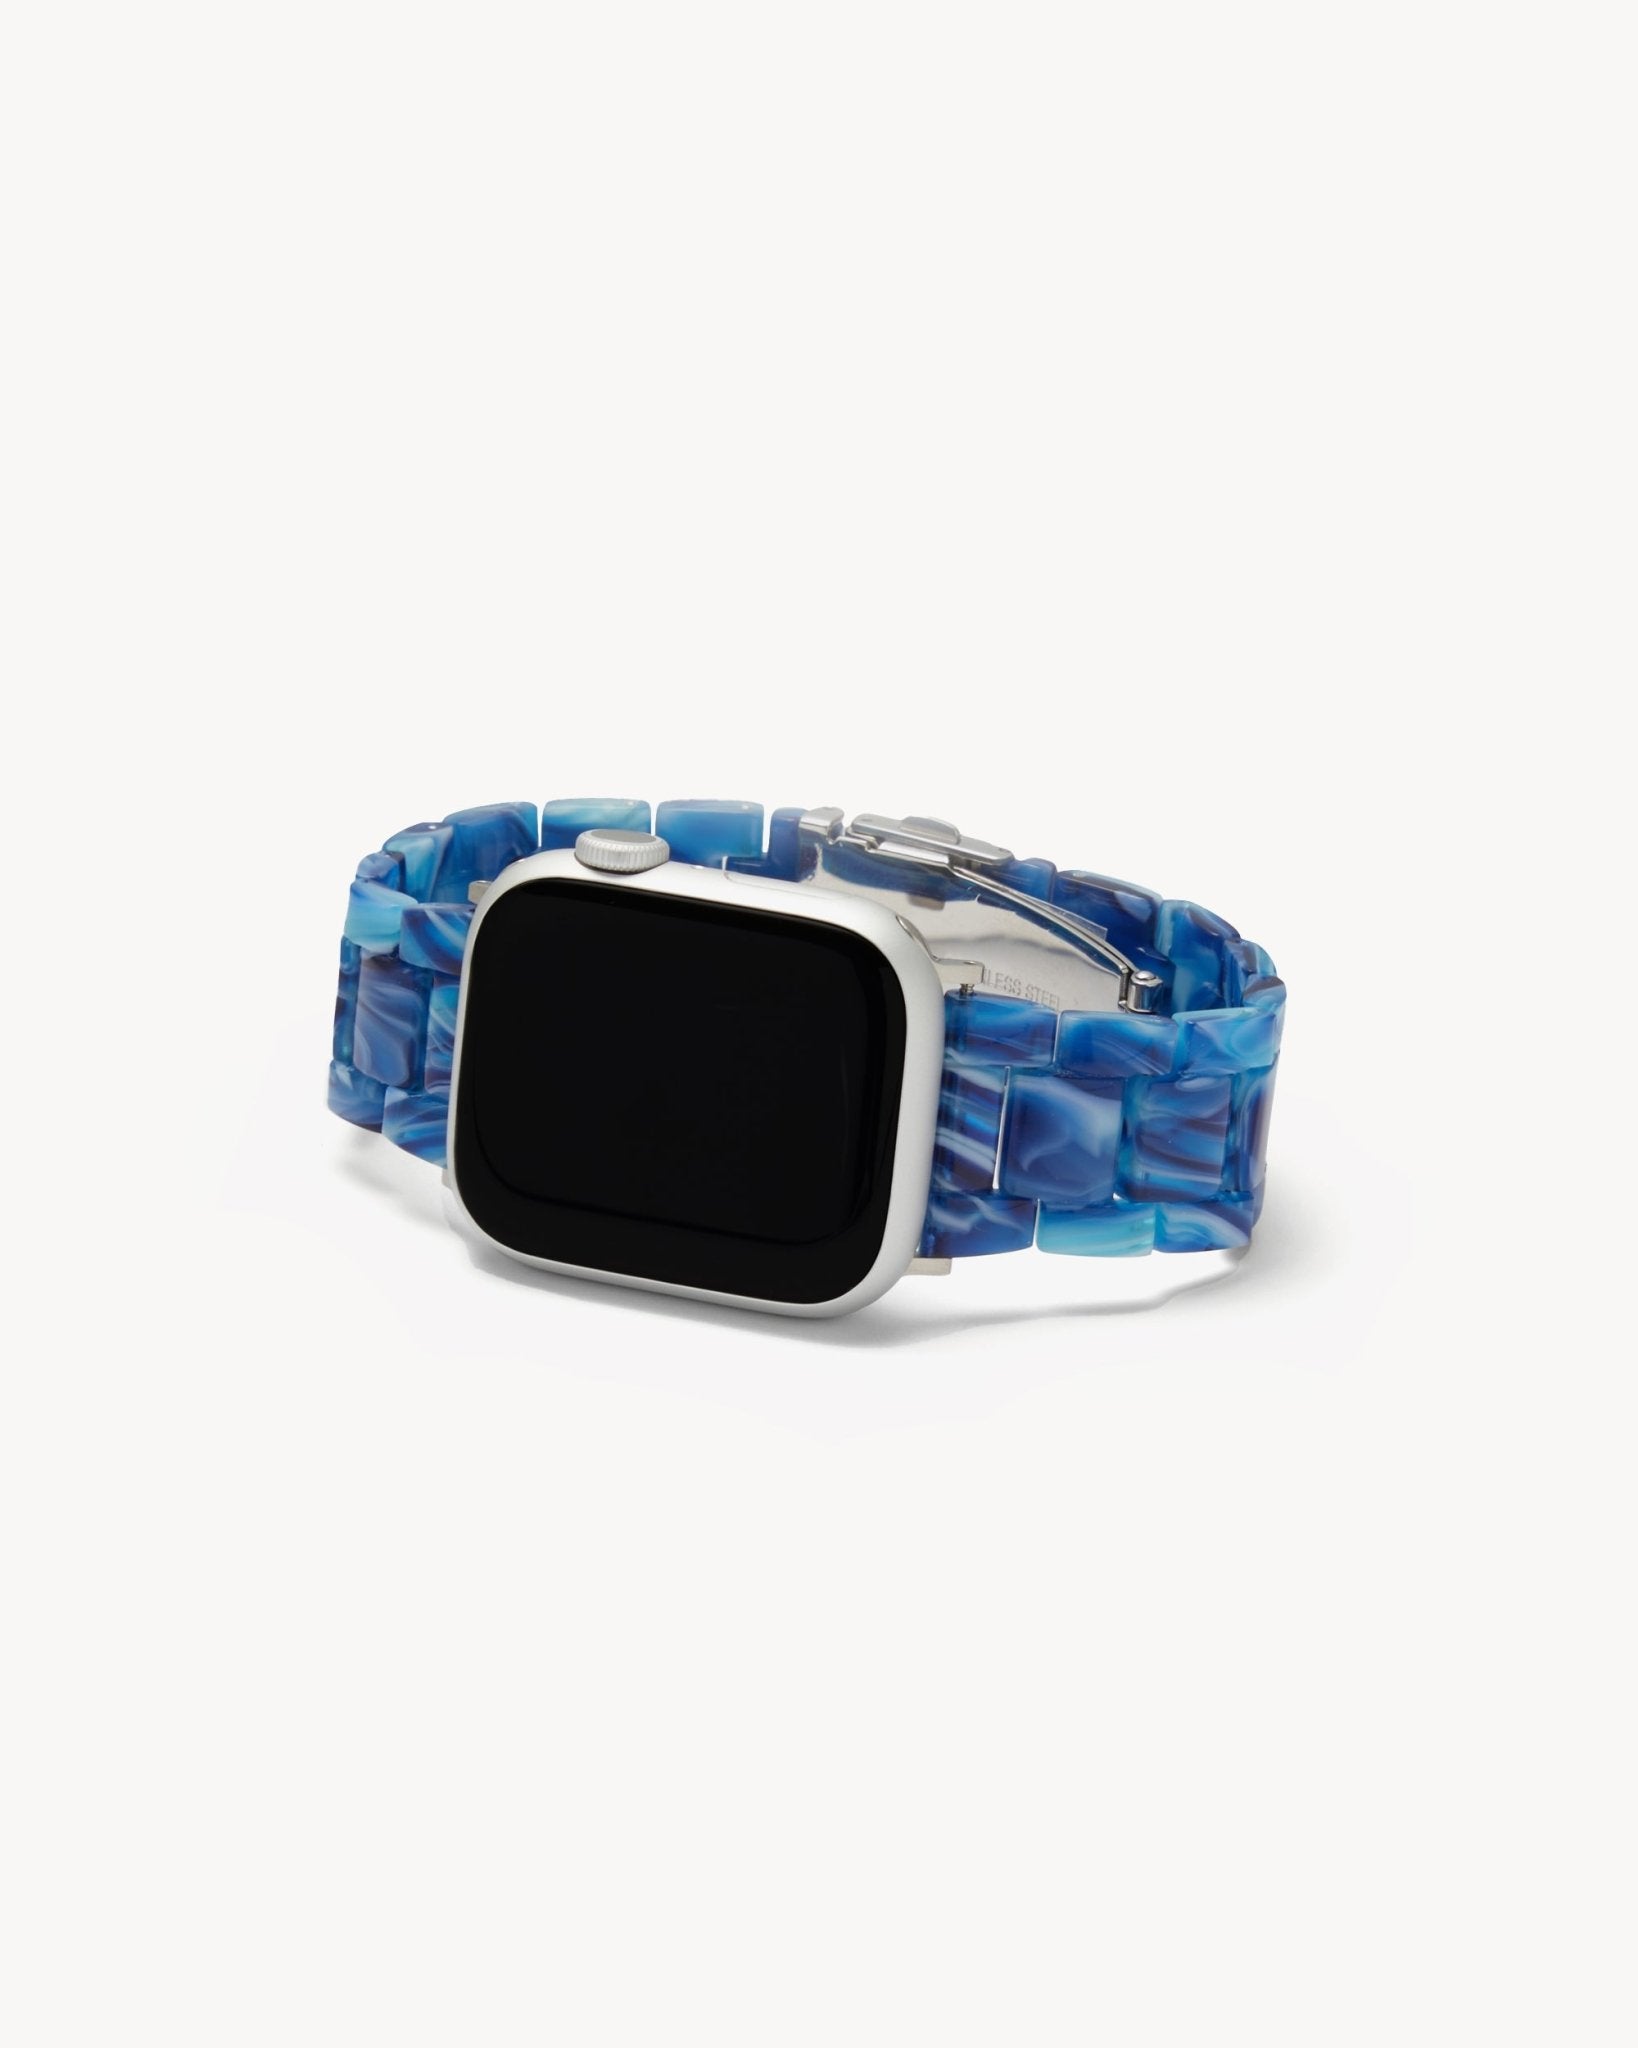 Apple Watch Band in Capri OUTLET - MACHETE